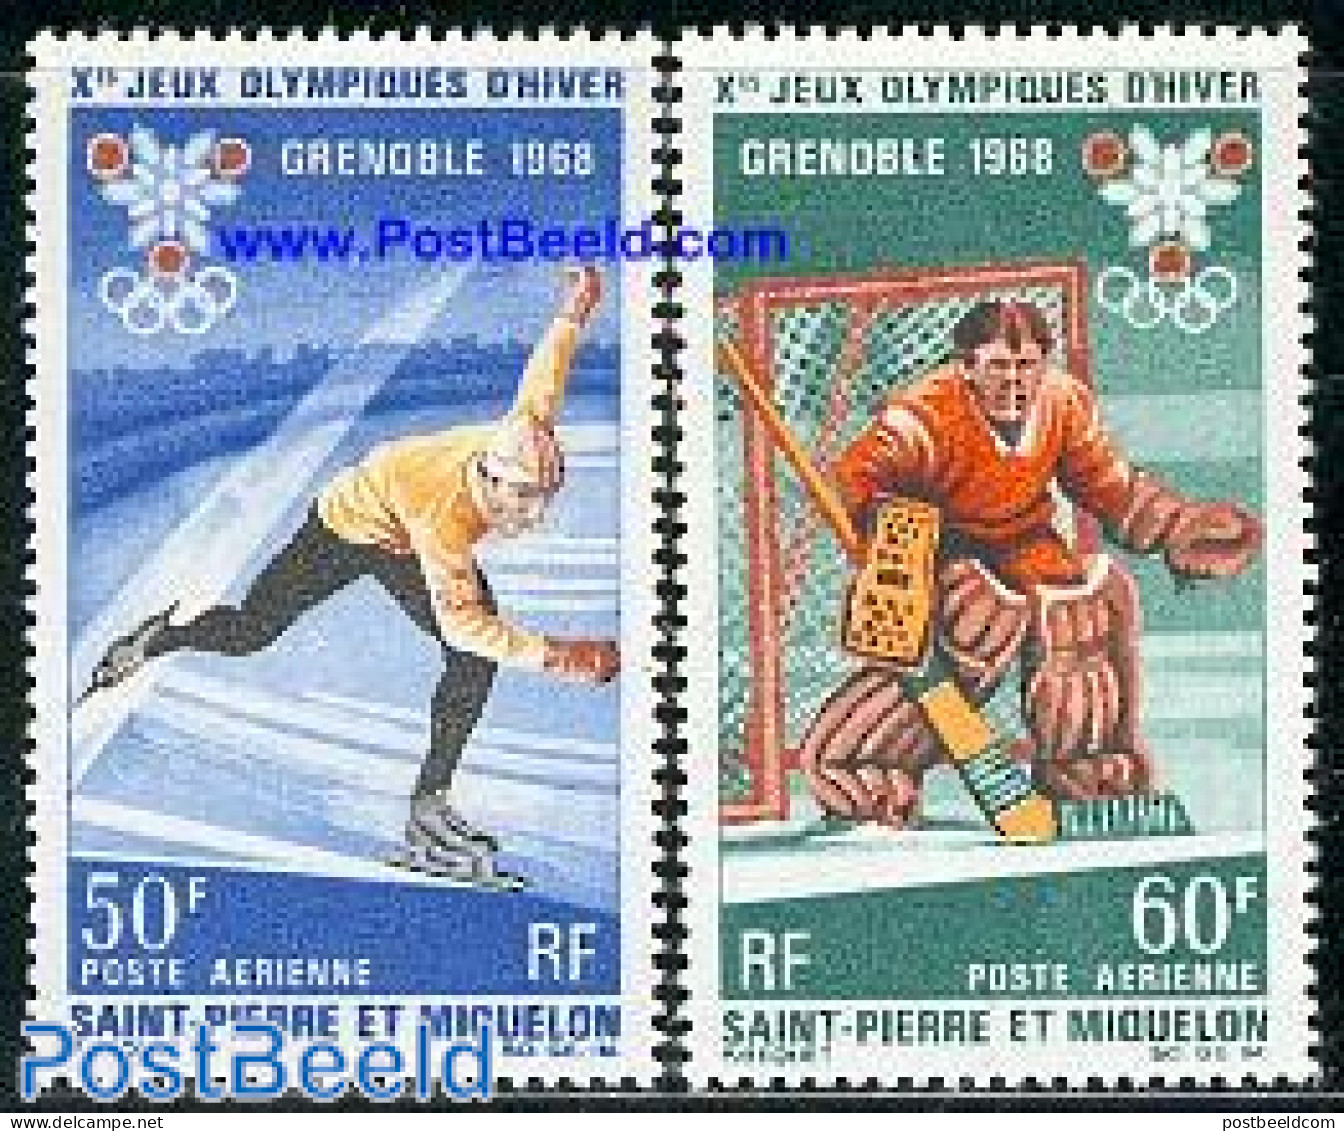 Saint Pierre And Miquelon 1968 Olympic Winter Games 2v, Mint NH, Sport - Ice Hockey - Olympic Winter Games - Skating - Hockey (su Ghiaccio)